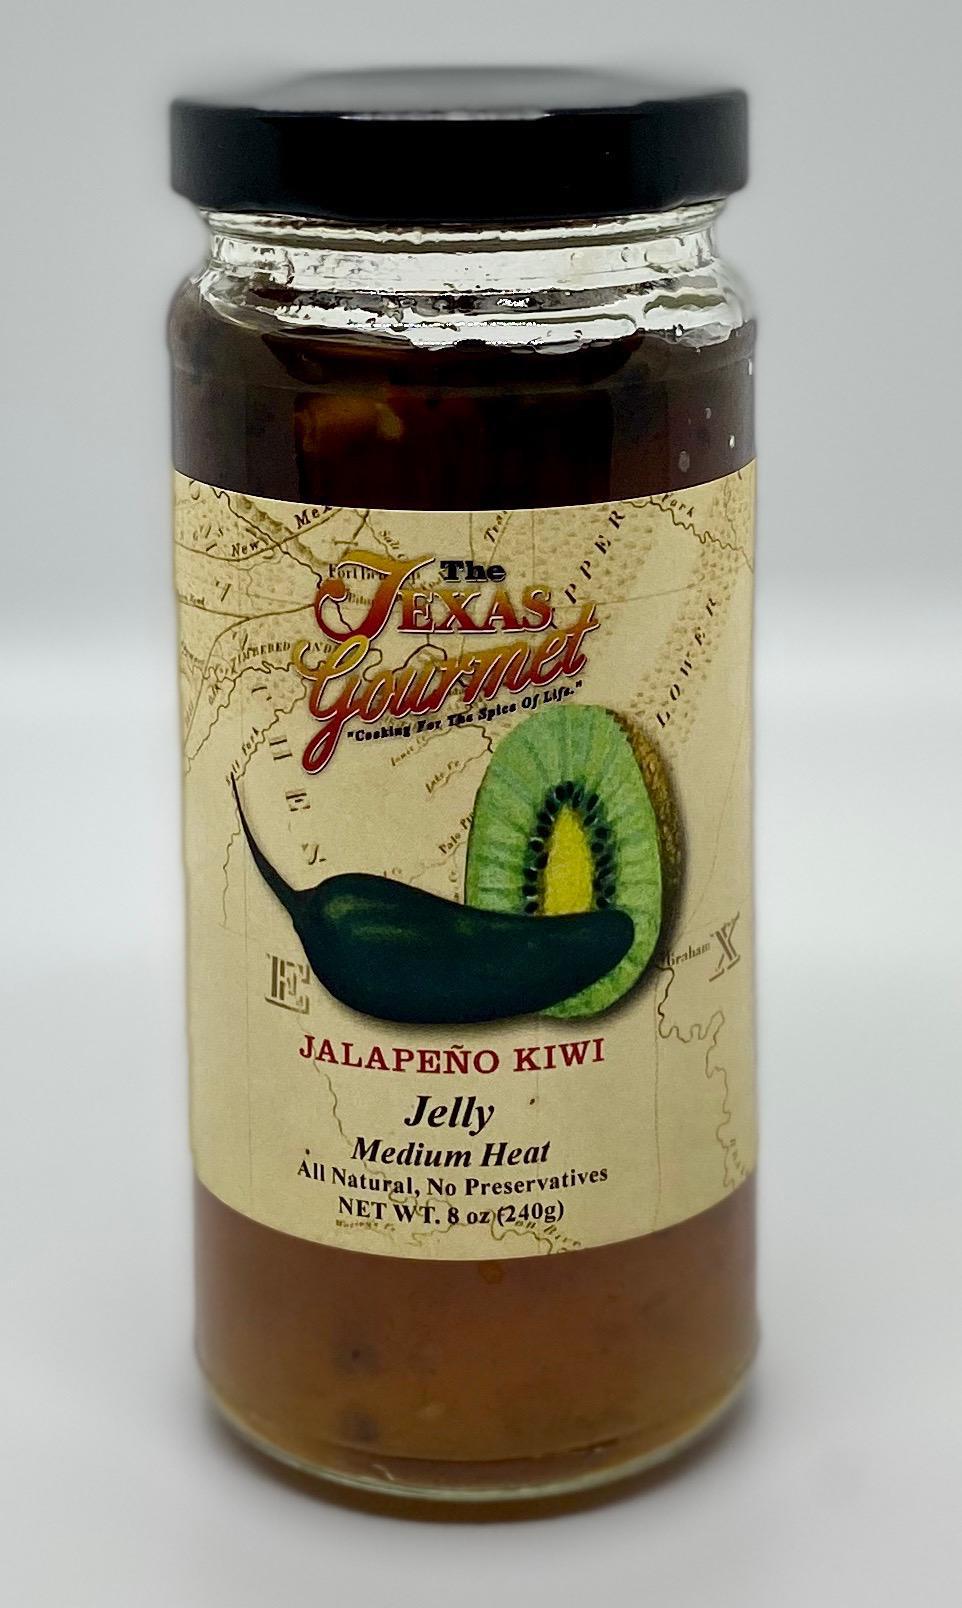 The Texas Gourmet Jalapeño Kiwi Jelly